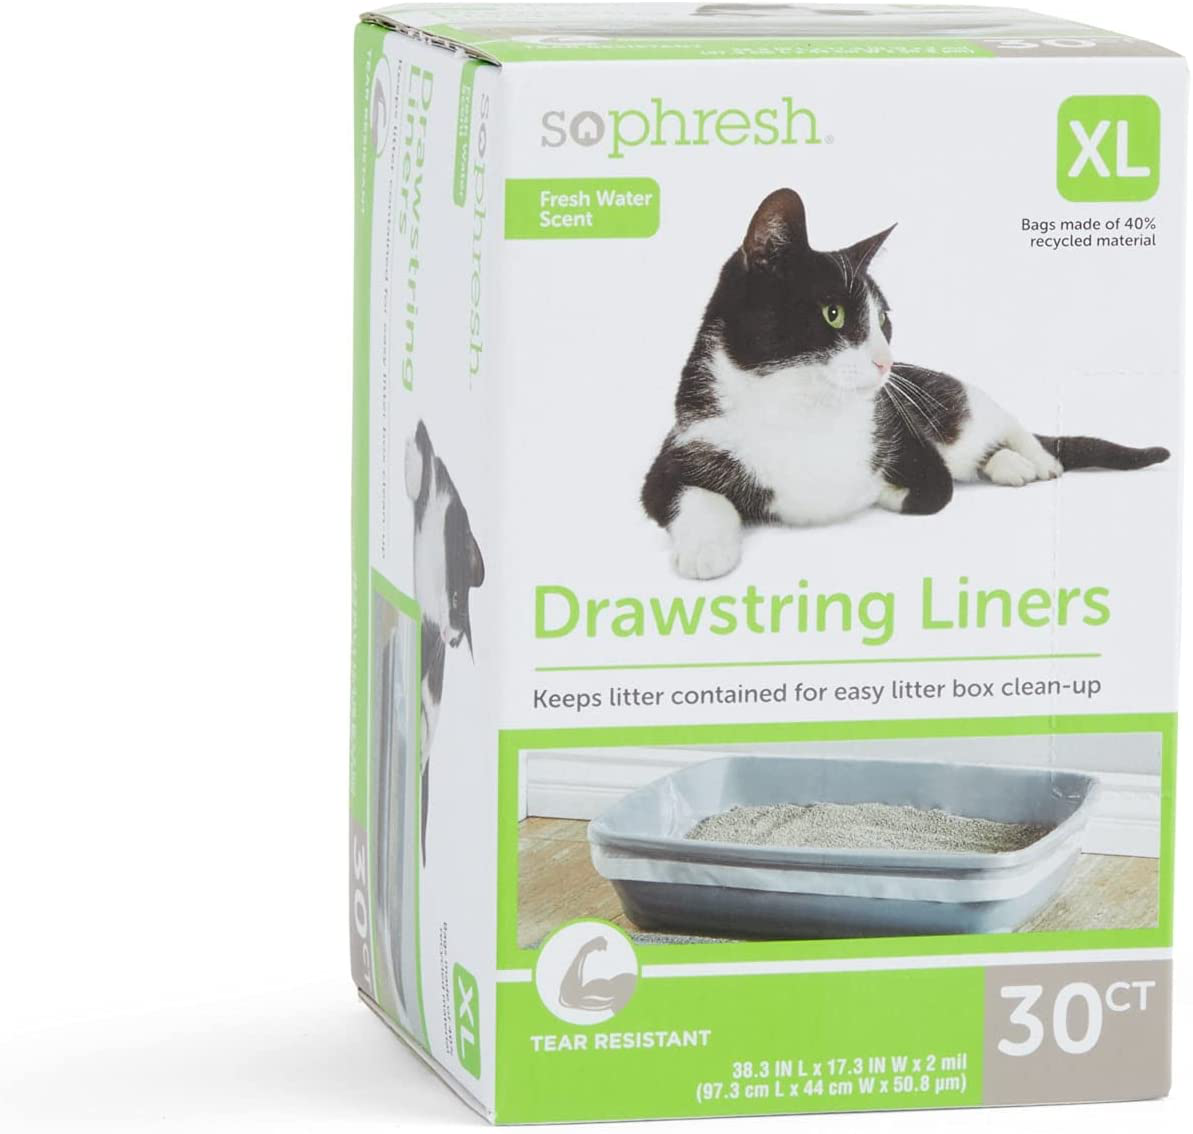 Petco Brand - so Phresh Drawstring Liners with Fresh Water Scent Cat Litter Box Animals & Pet Supplies > Pet Supplies > Cat Supplies > Cat Litter Box Liners So Phresh X-Large  